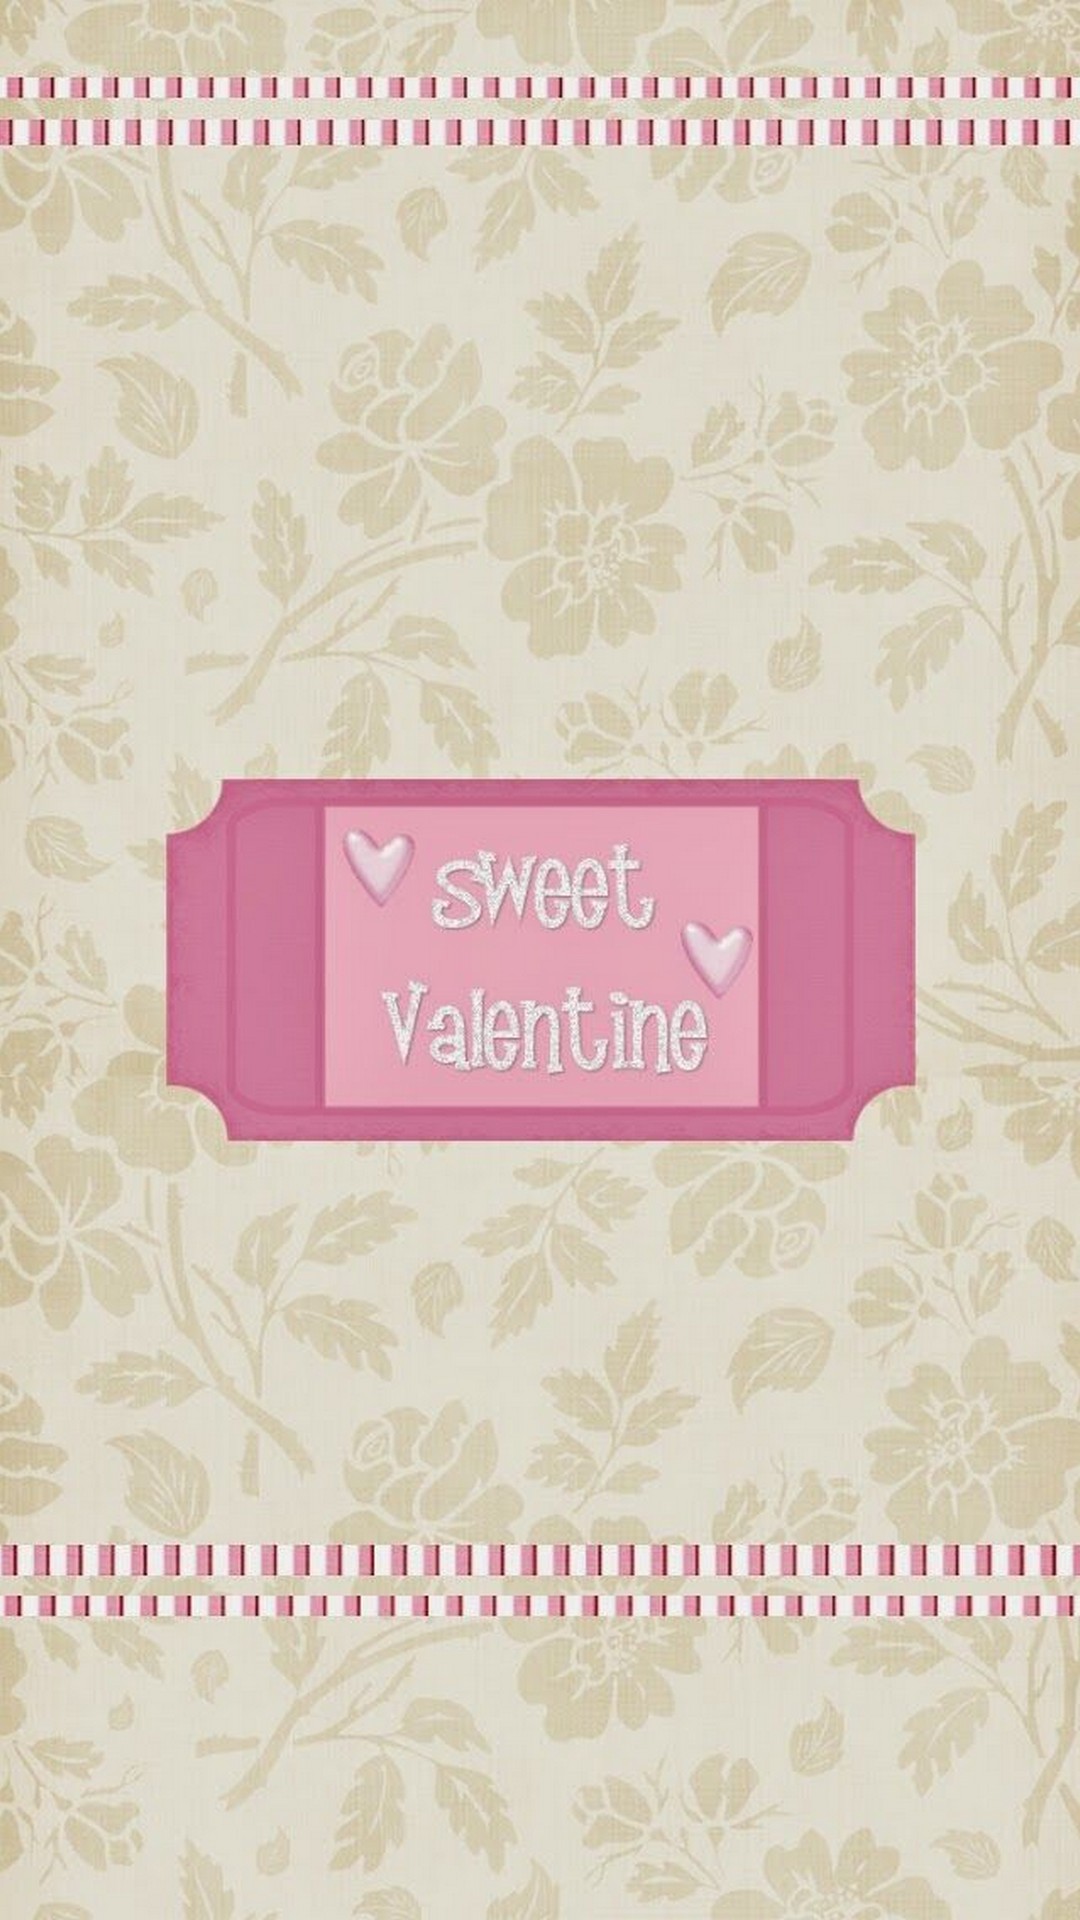 Sweet Valentine iPhone Wallpaper resolution 1080x1920